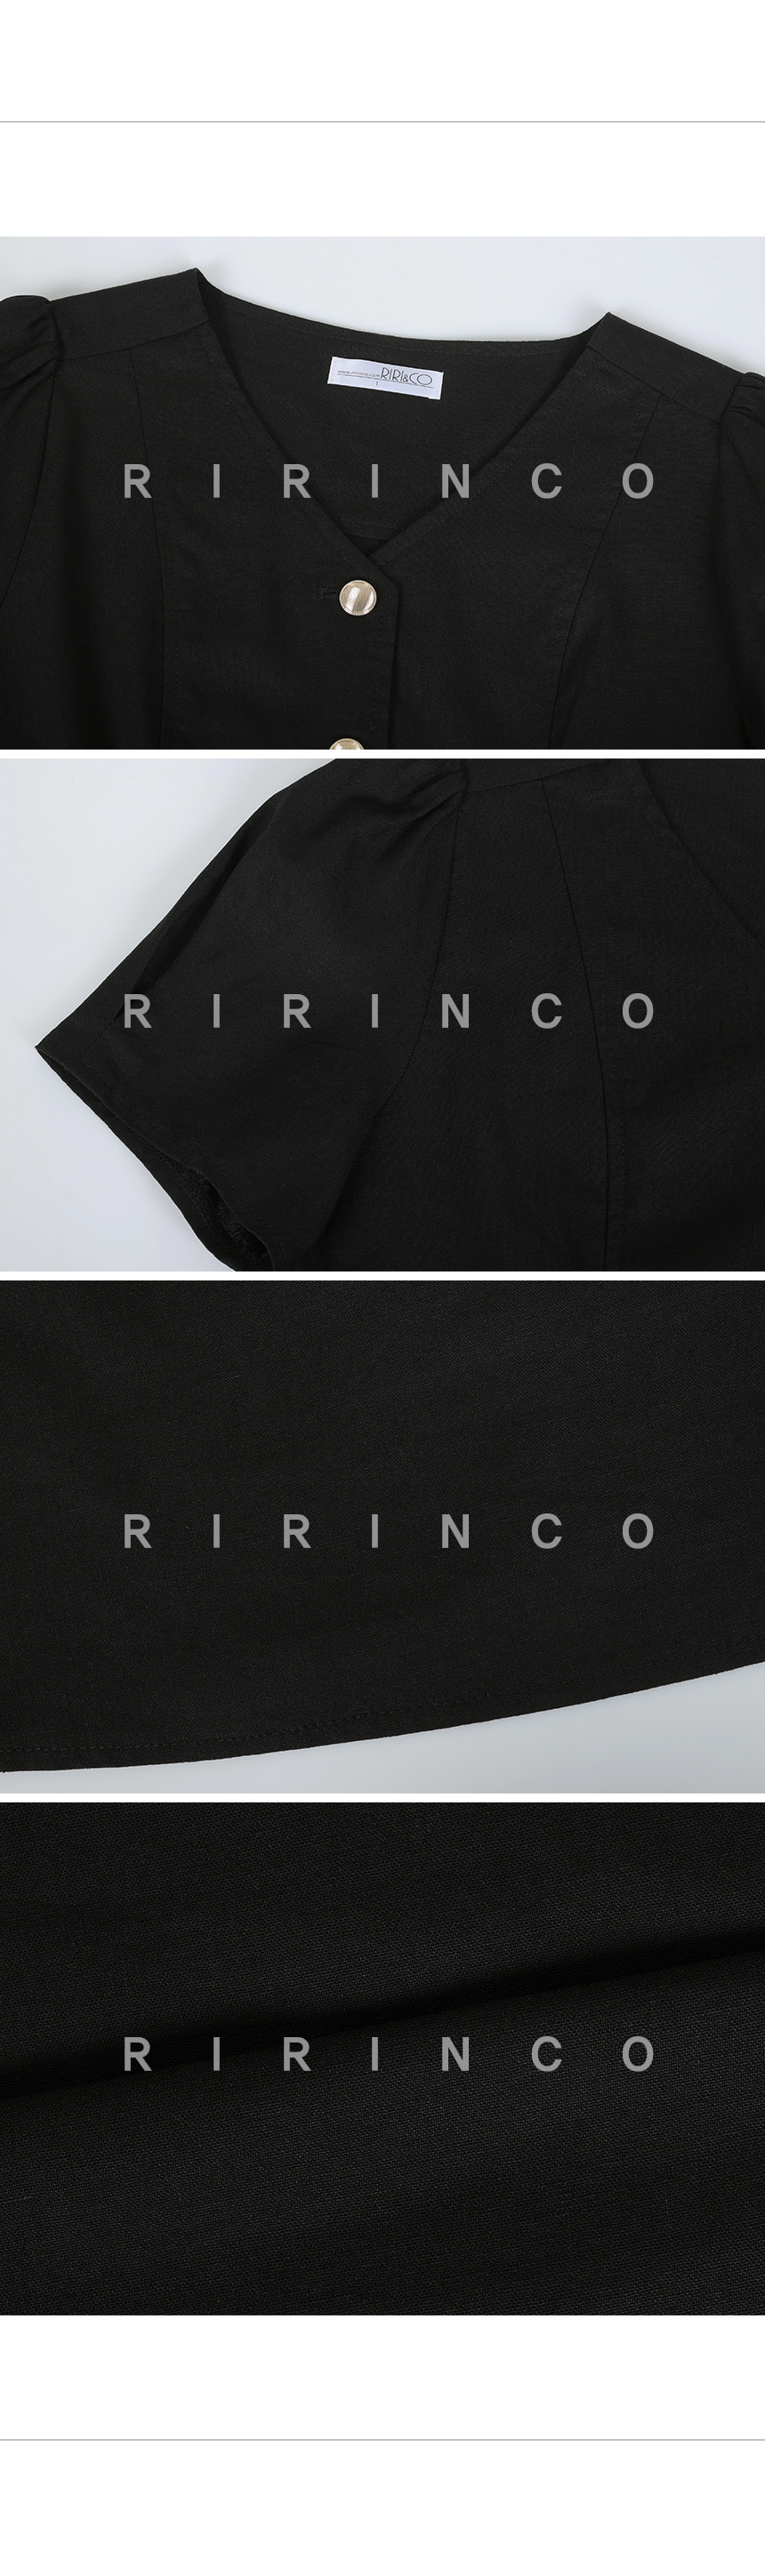 RIRINCO (リネン55%）Vネックパフ袖セミクロップド丈ブラウス